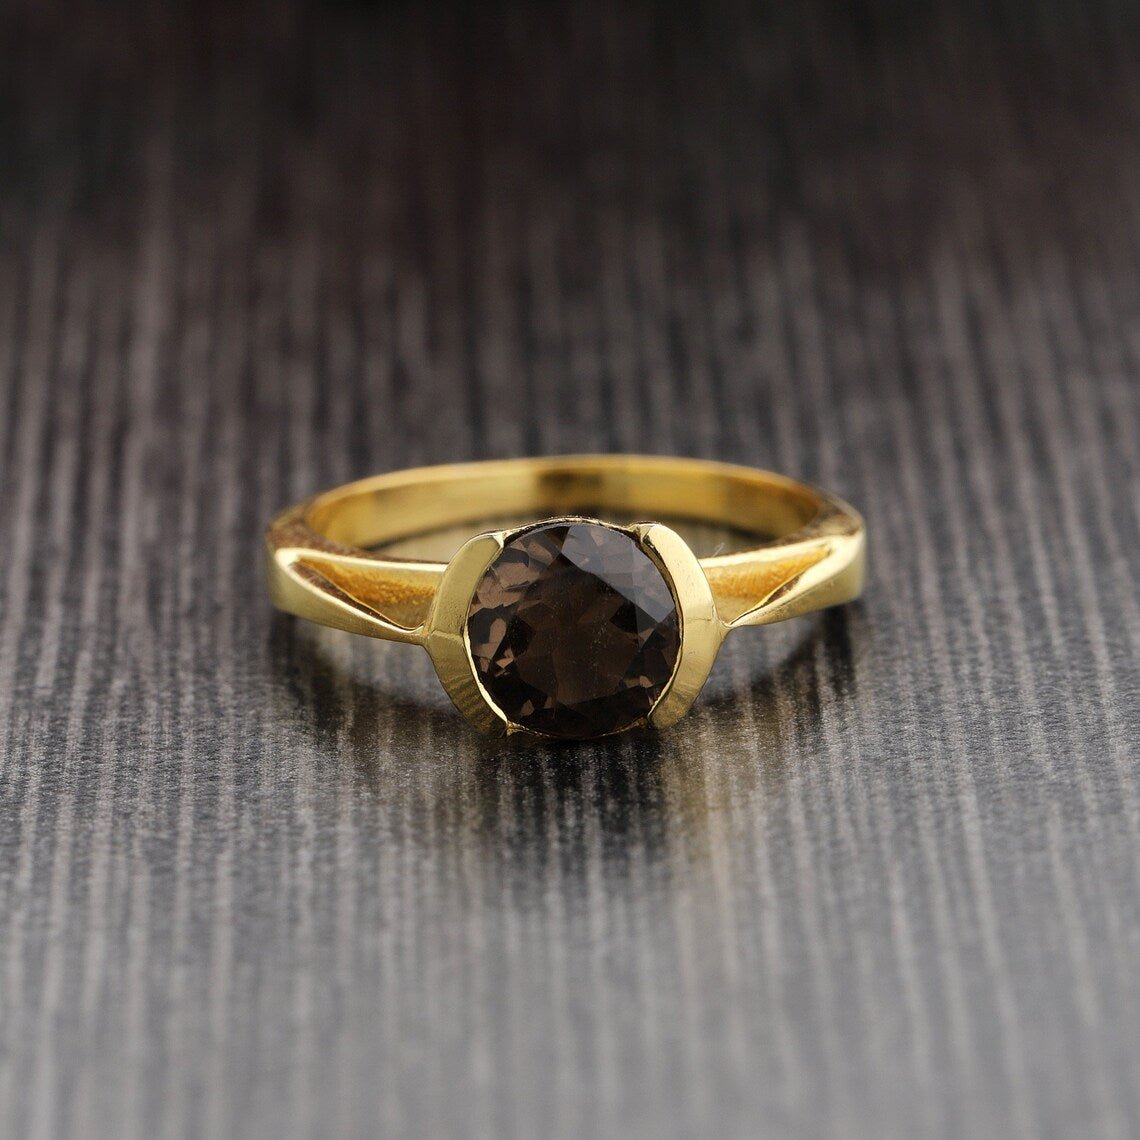 Smoky Quartz Ring - Smokey Gemstone Ring - 7x7mm Faceted Round Smokey Topaz - 925 Sterling Silver Ring - Smokey Quartz Gold Ring Handmade